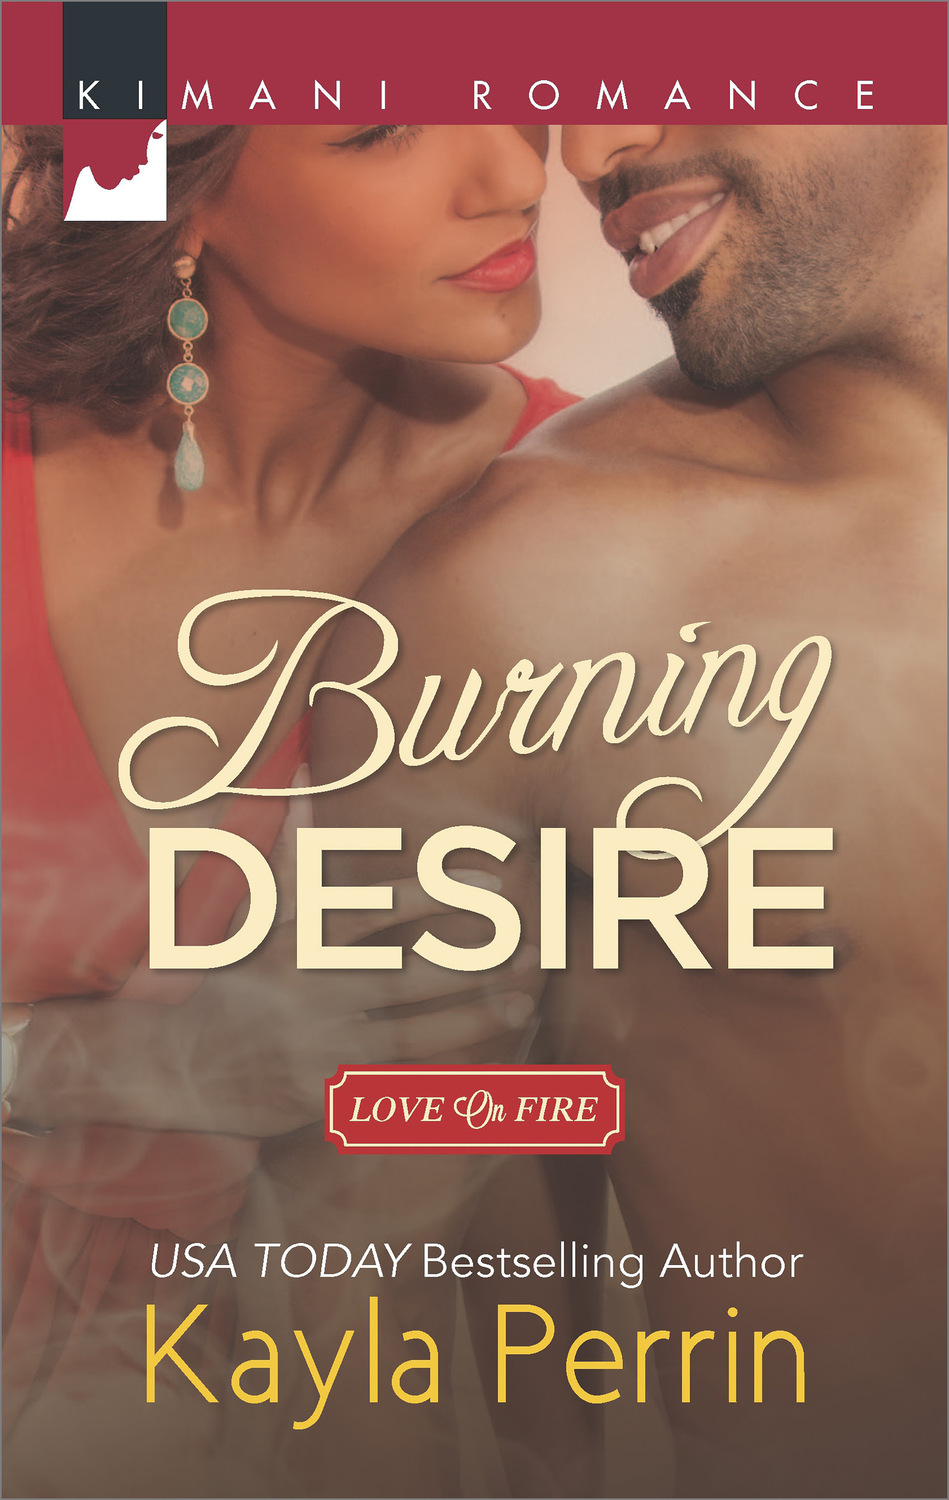 Burning desires